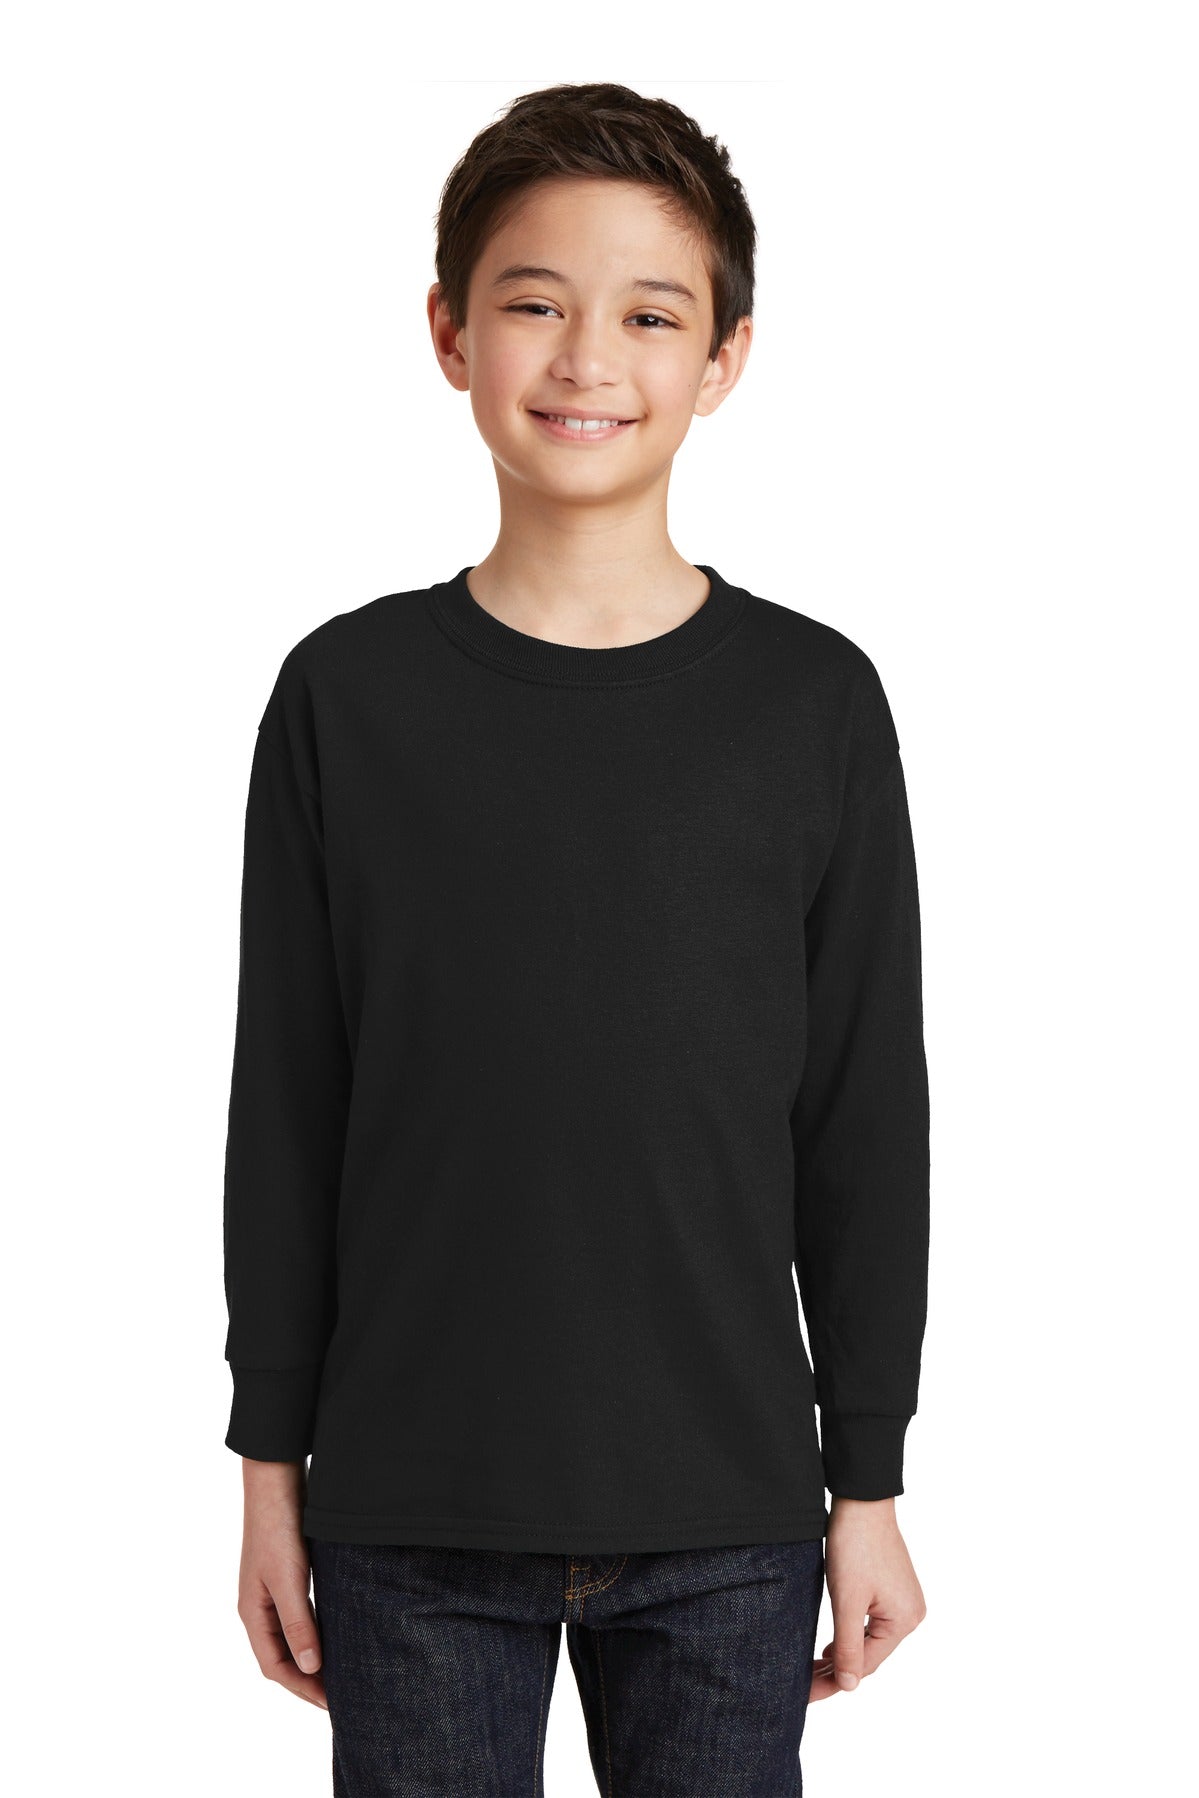 Youth 100% Cotton Long Sleeve T-Shirt 5400B